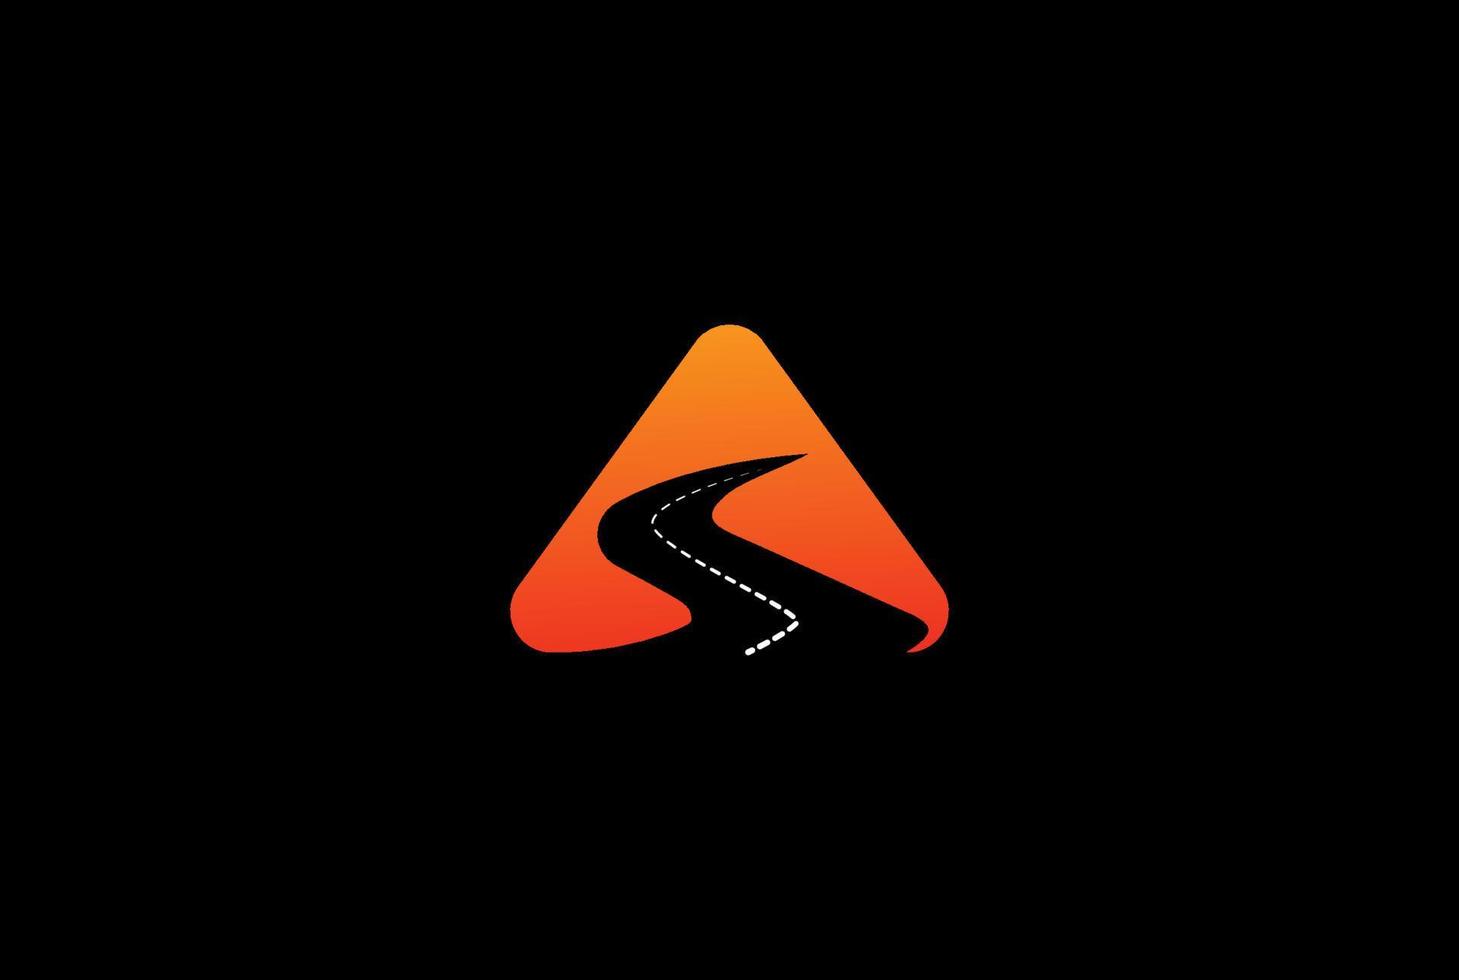 Simple Minimalist Triangle Mountain Hill Winding Street Road River Creek Logo Design Vector